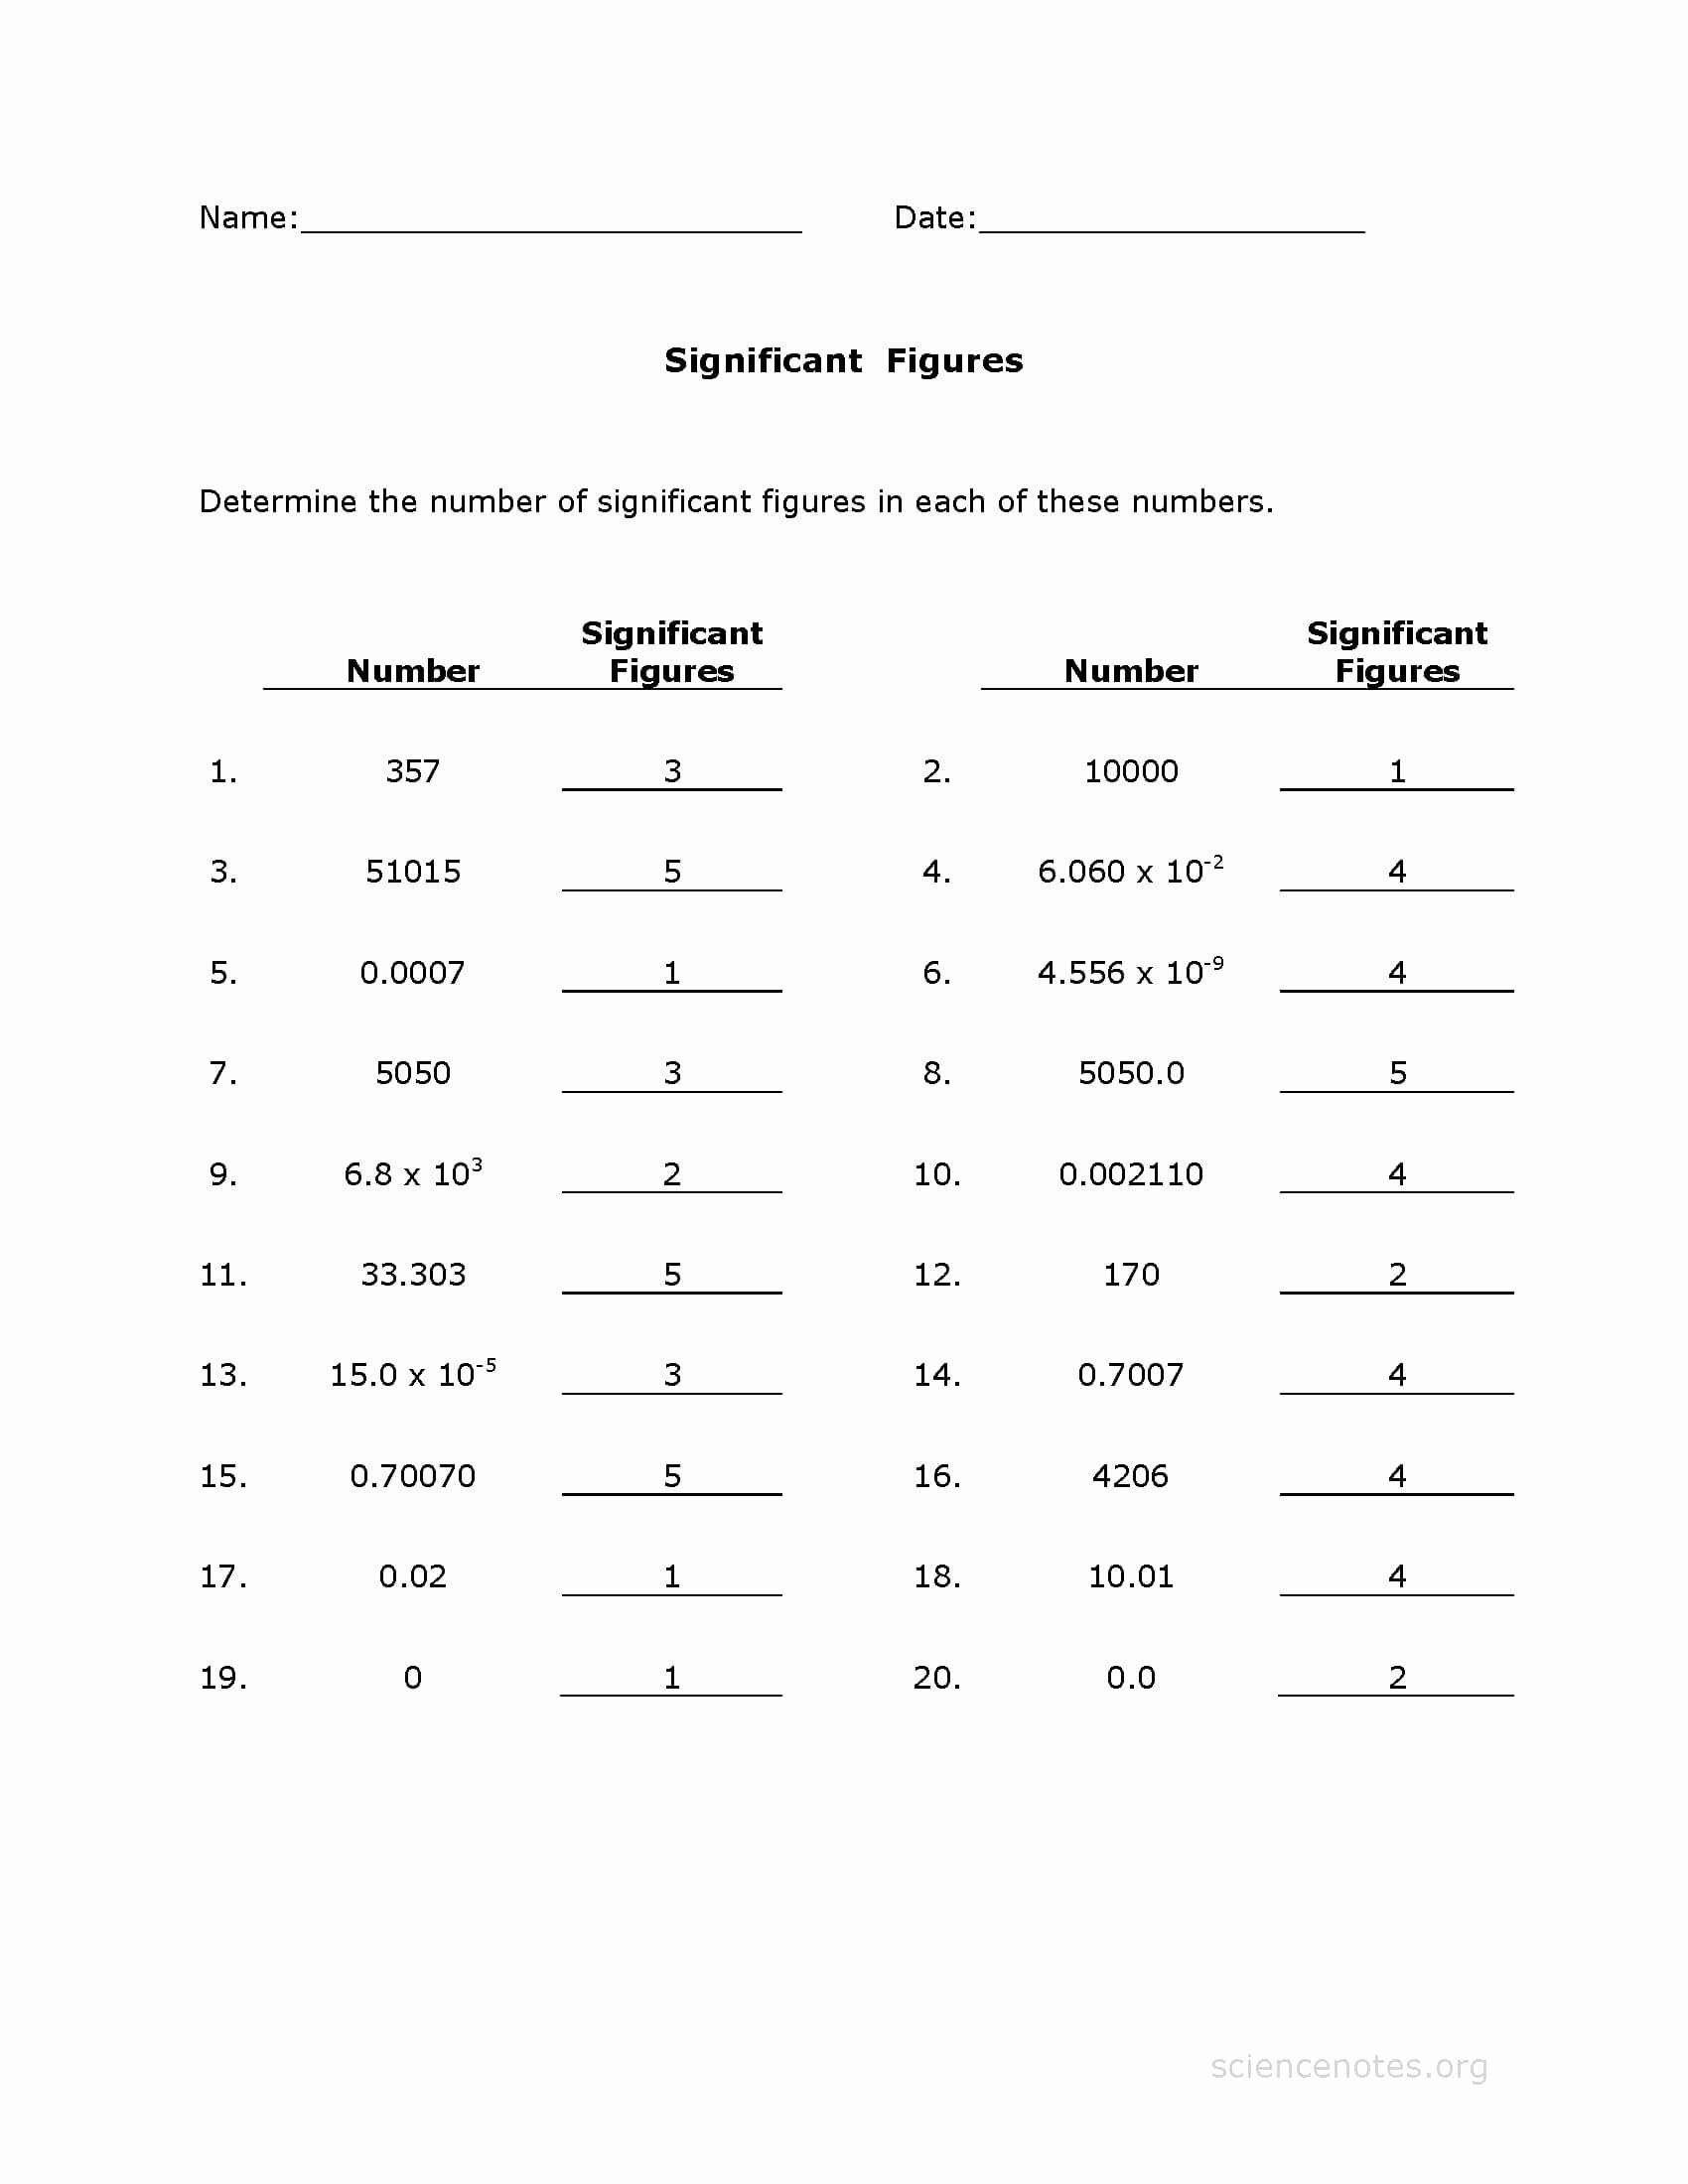 Significant Figures Practice Worksheet Unique Significant Figures Worksheet Page 2 Of 2